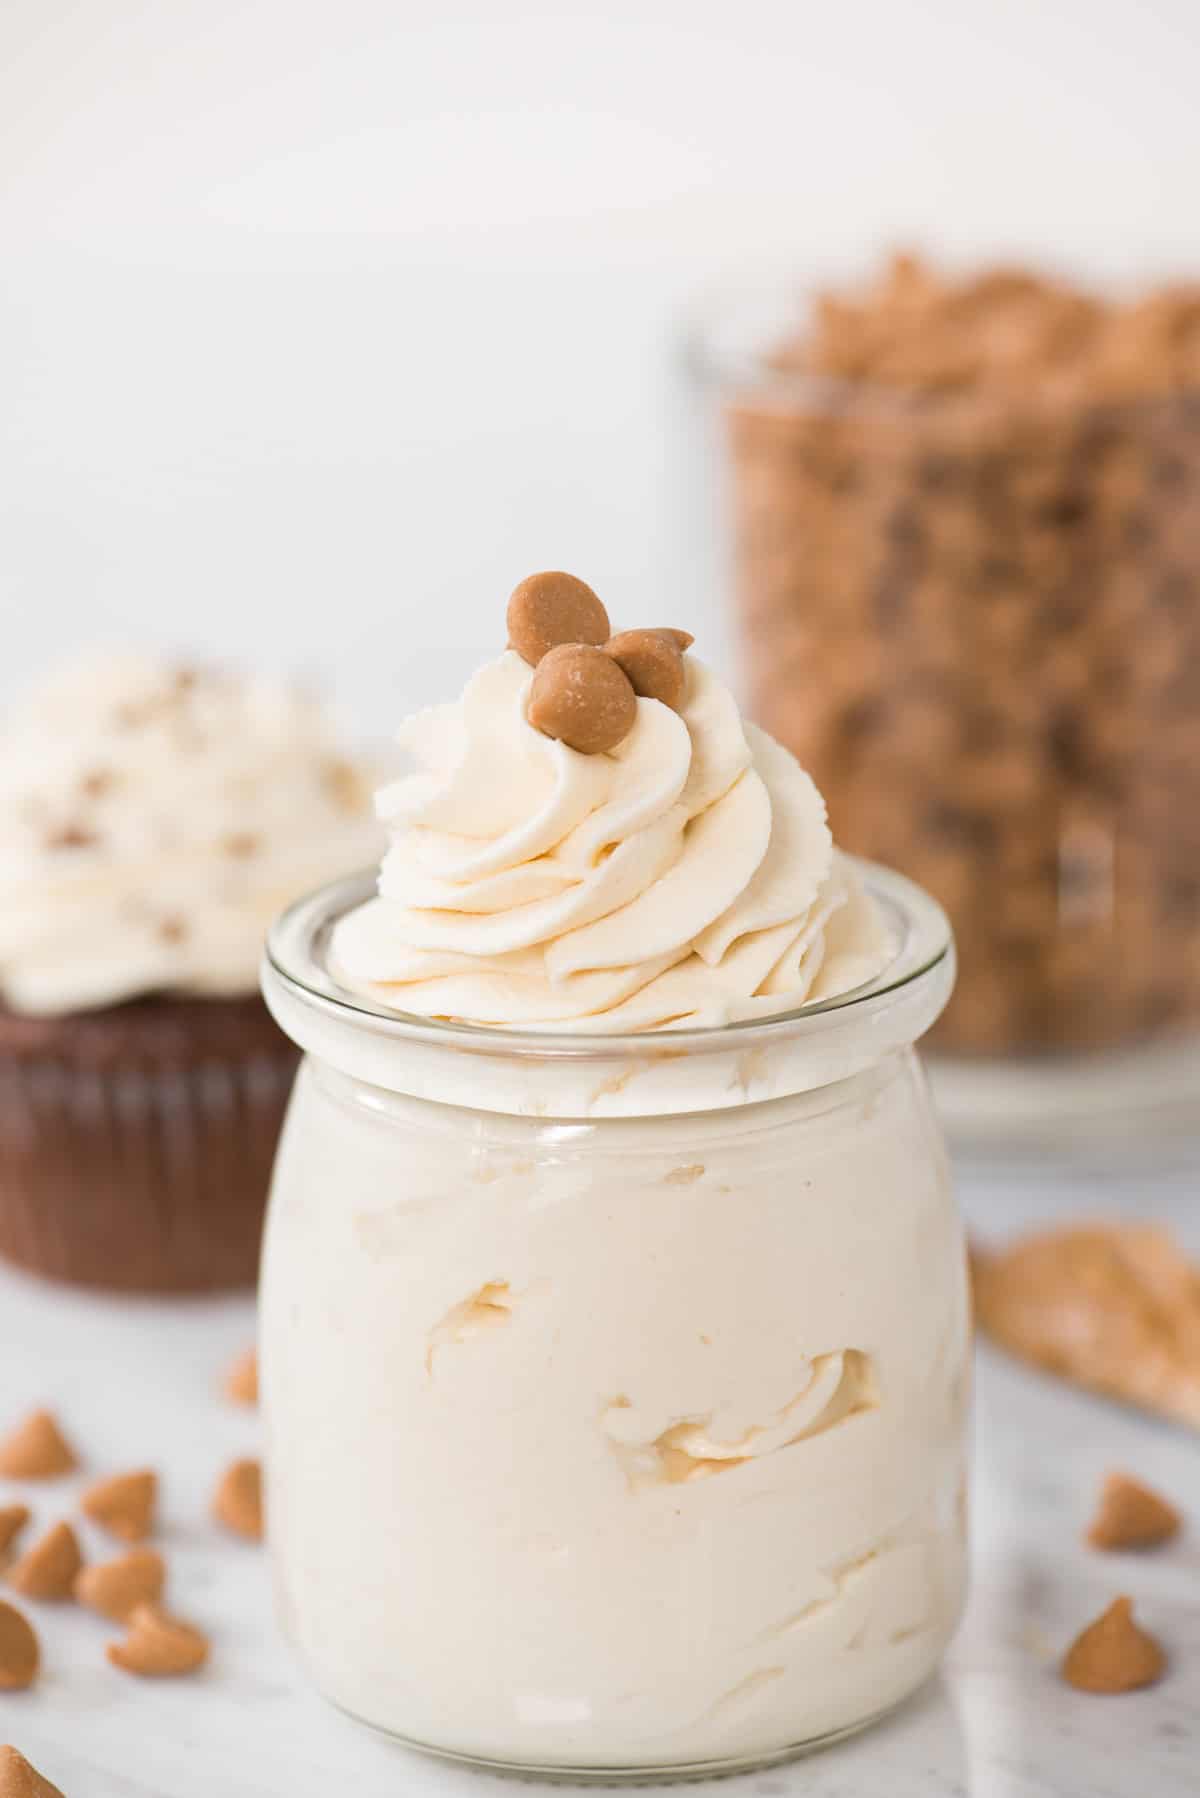 Peanut butter whipped cream in glass jar 